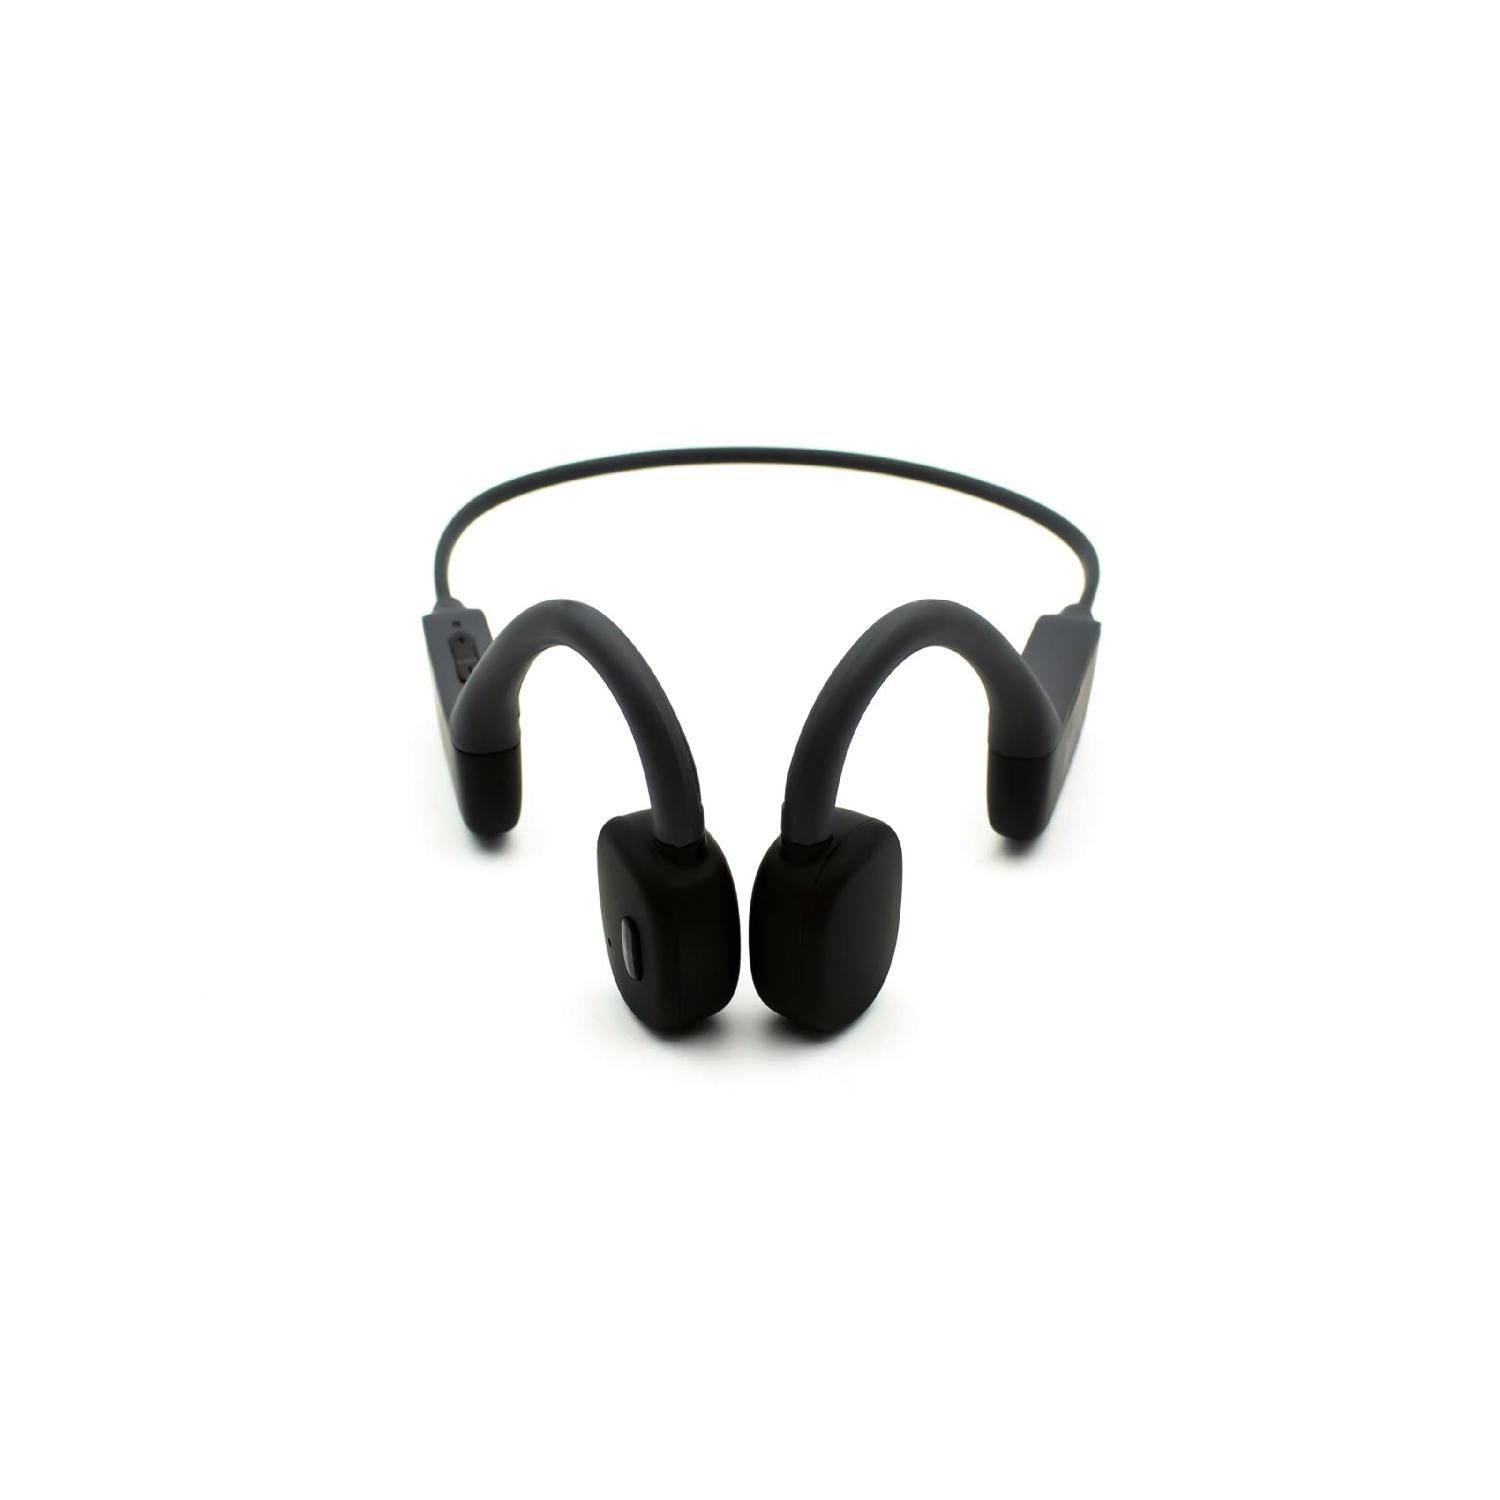 IMPERIAL bluTC 2, schwarz Neckband active Headset